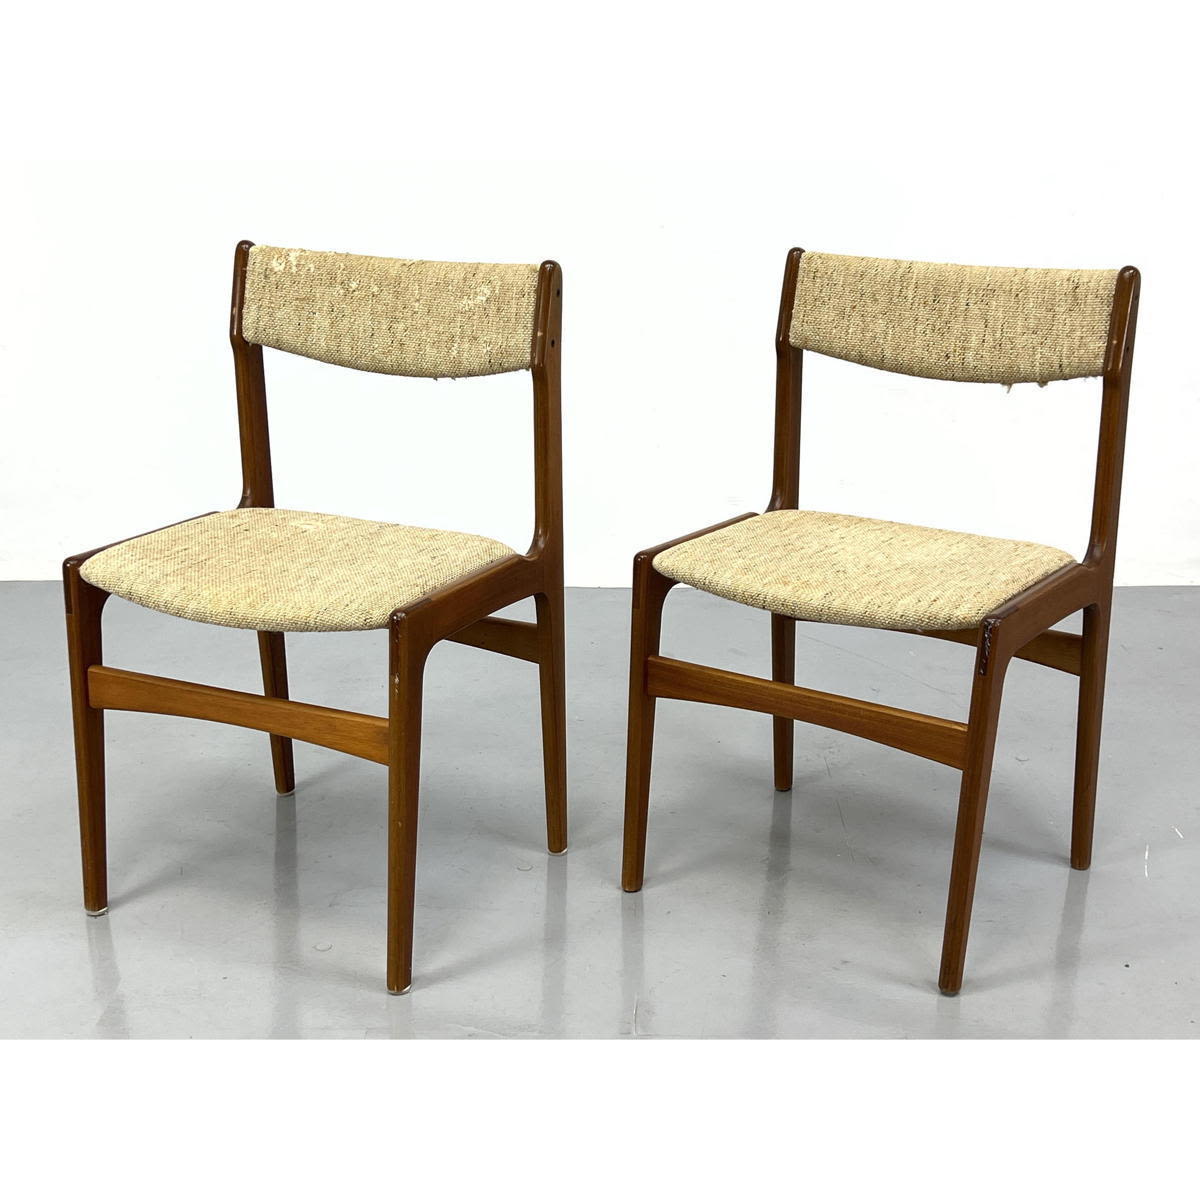 2pc Danish Modern teak Dining Chairs.